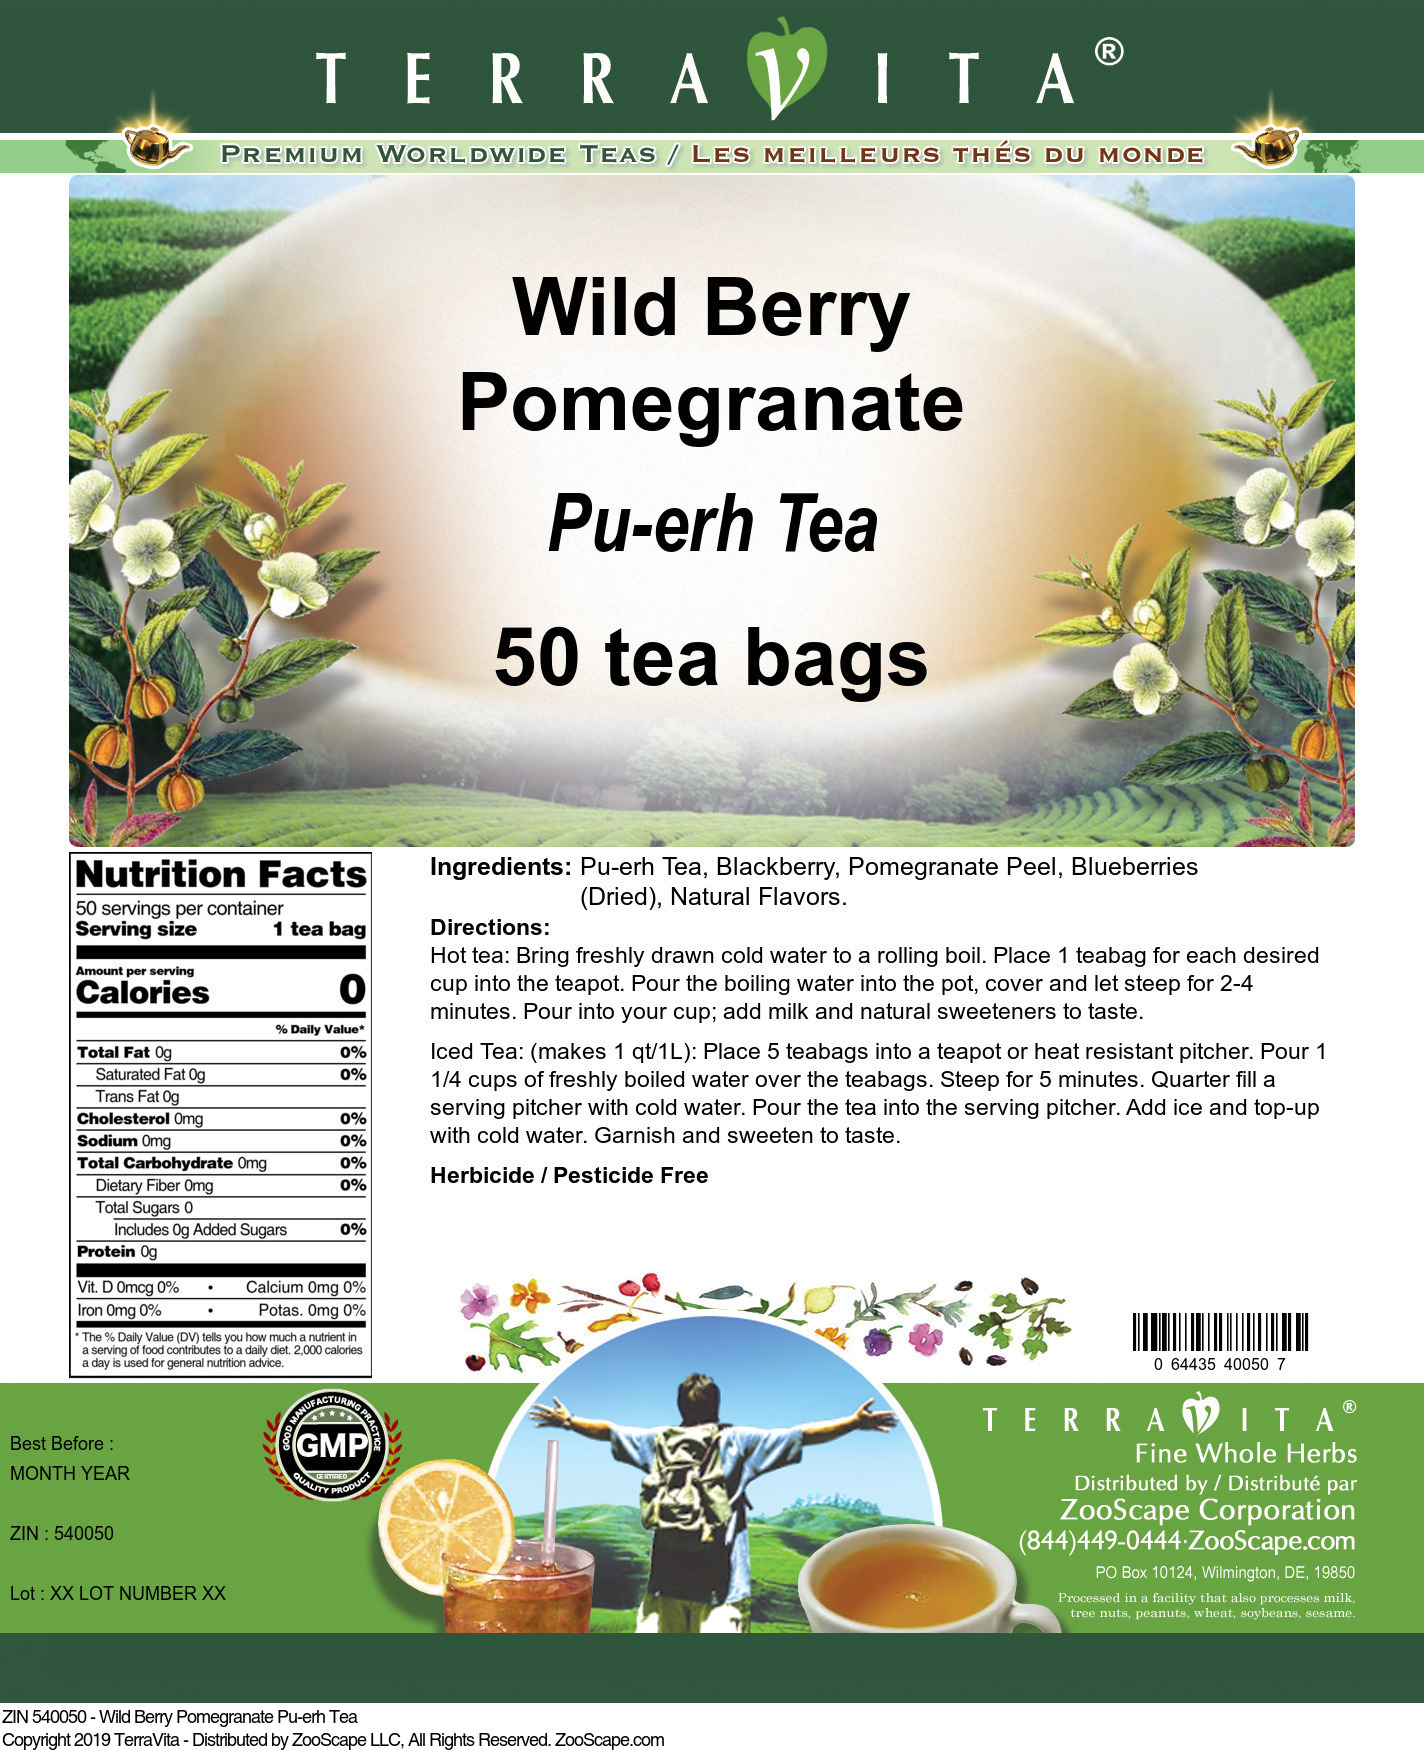 Wild Berry Pomegranate Pu-erh Tea - Label